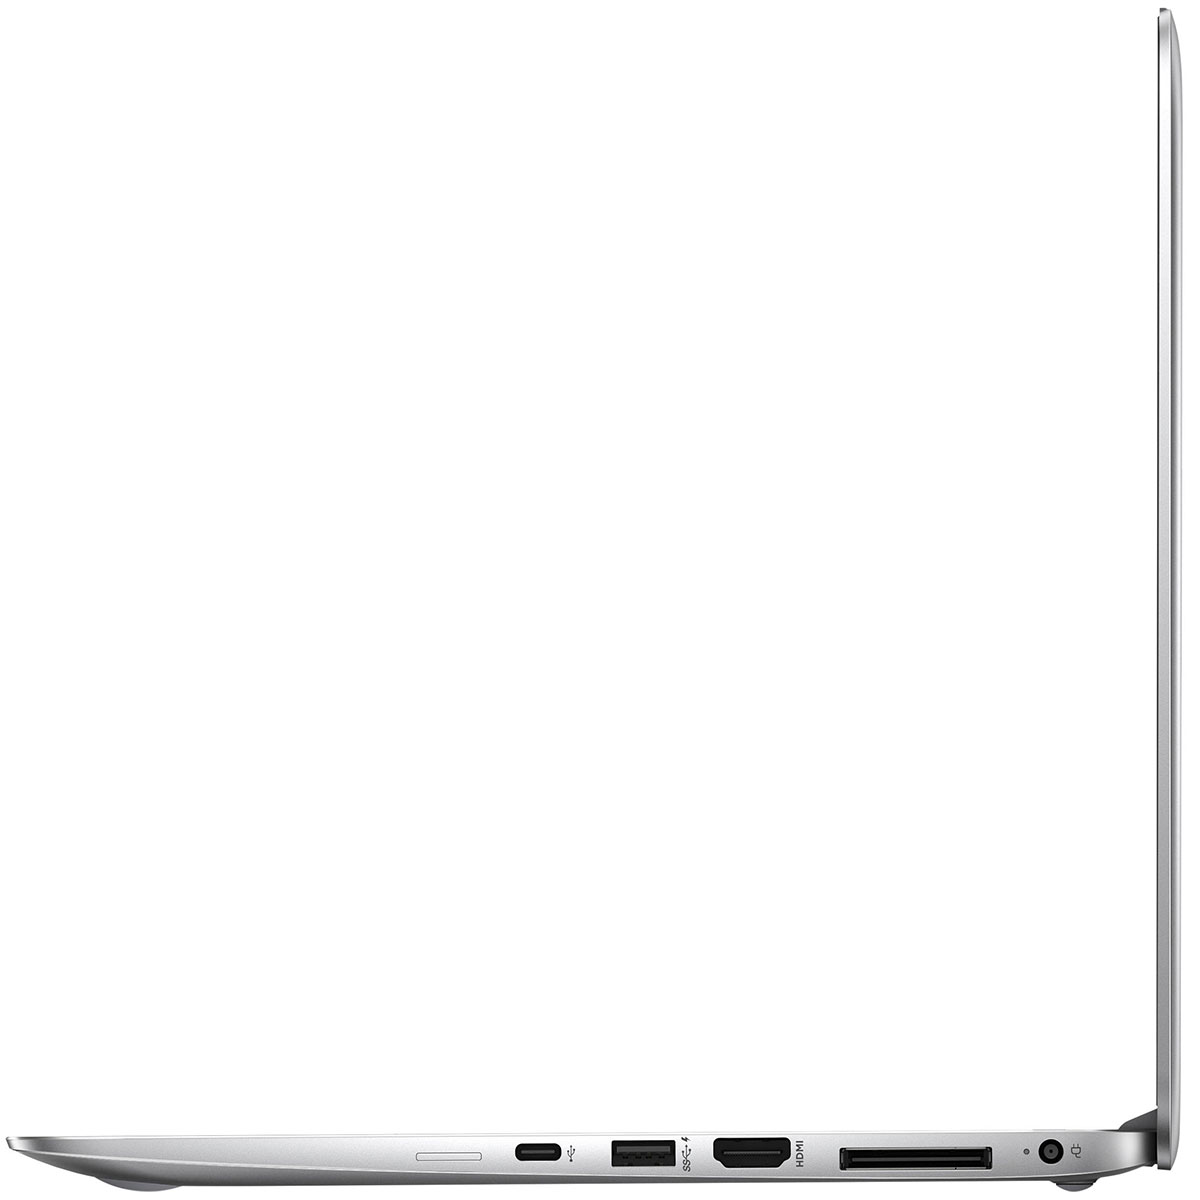 HP EliteBook Folio 1040 G3 Intel Core i5 6th Gen 8GB RAM 256GB SSD 14 Inches HD Touchscreen Display